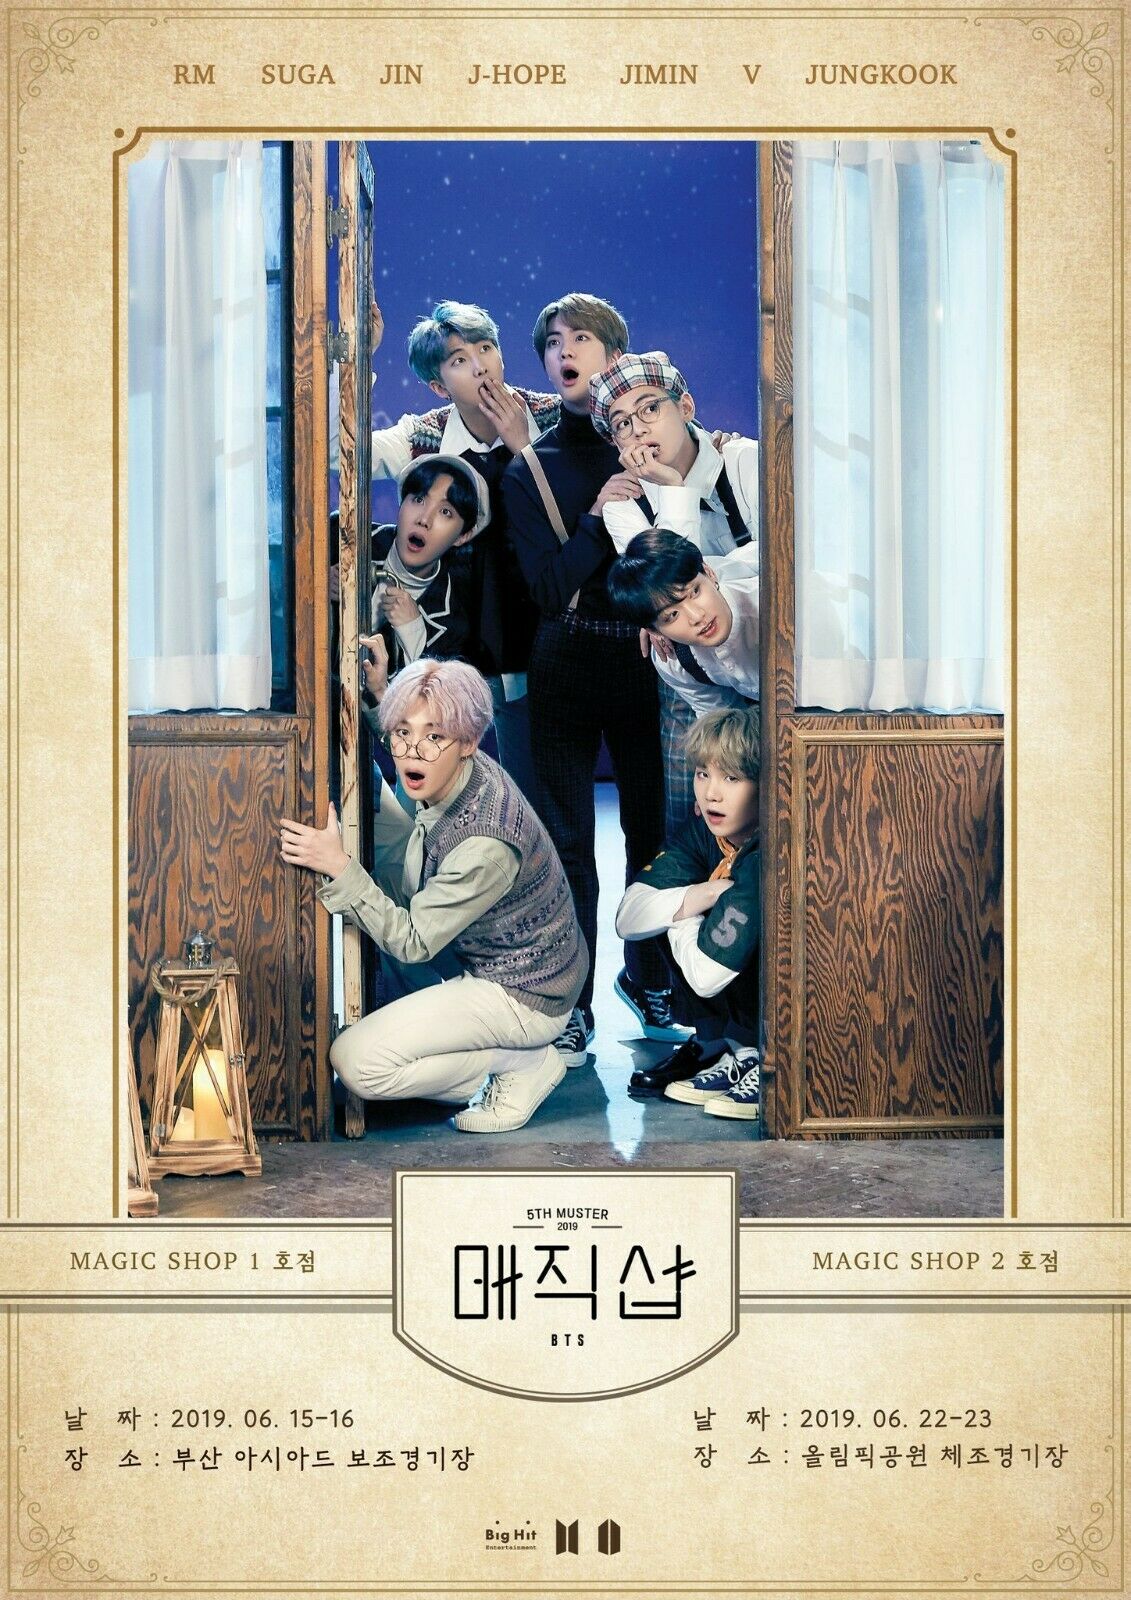 BTS - [Magic Shop] 2019 5th Muster Blu-Ray 4 Discs+32p PhotoBook+